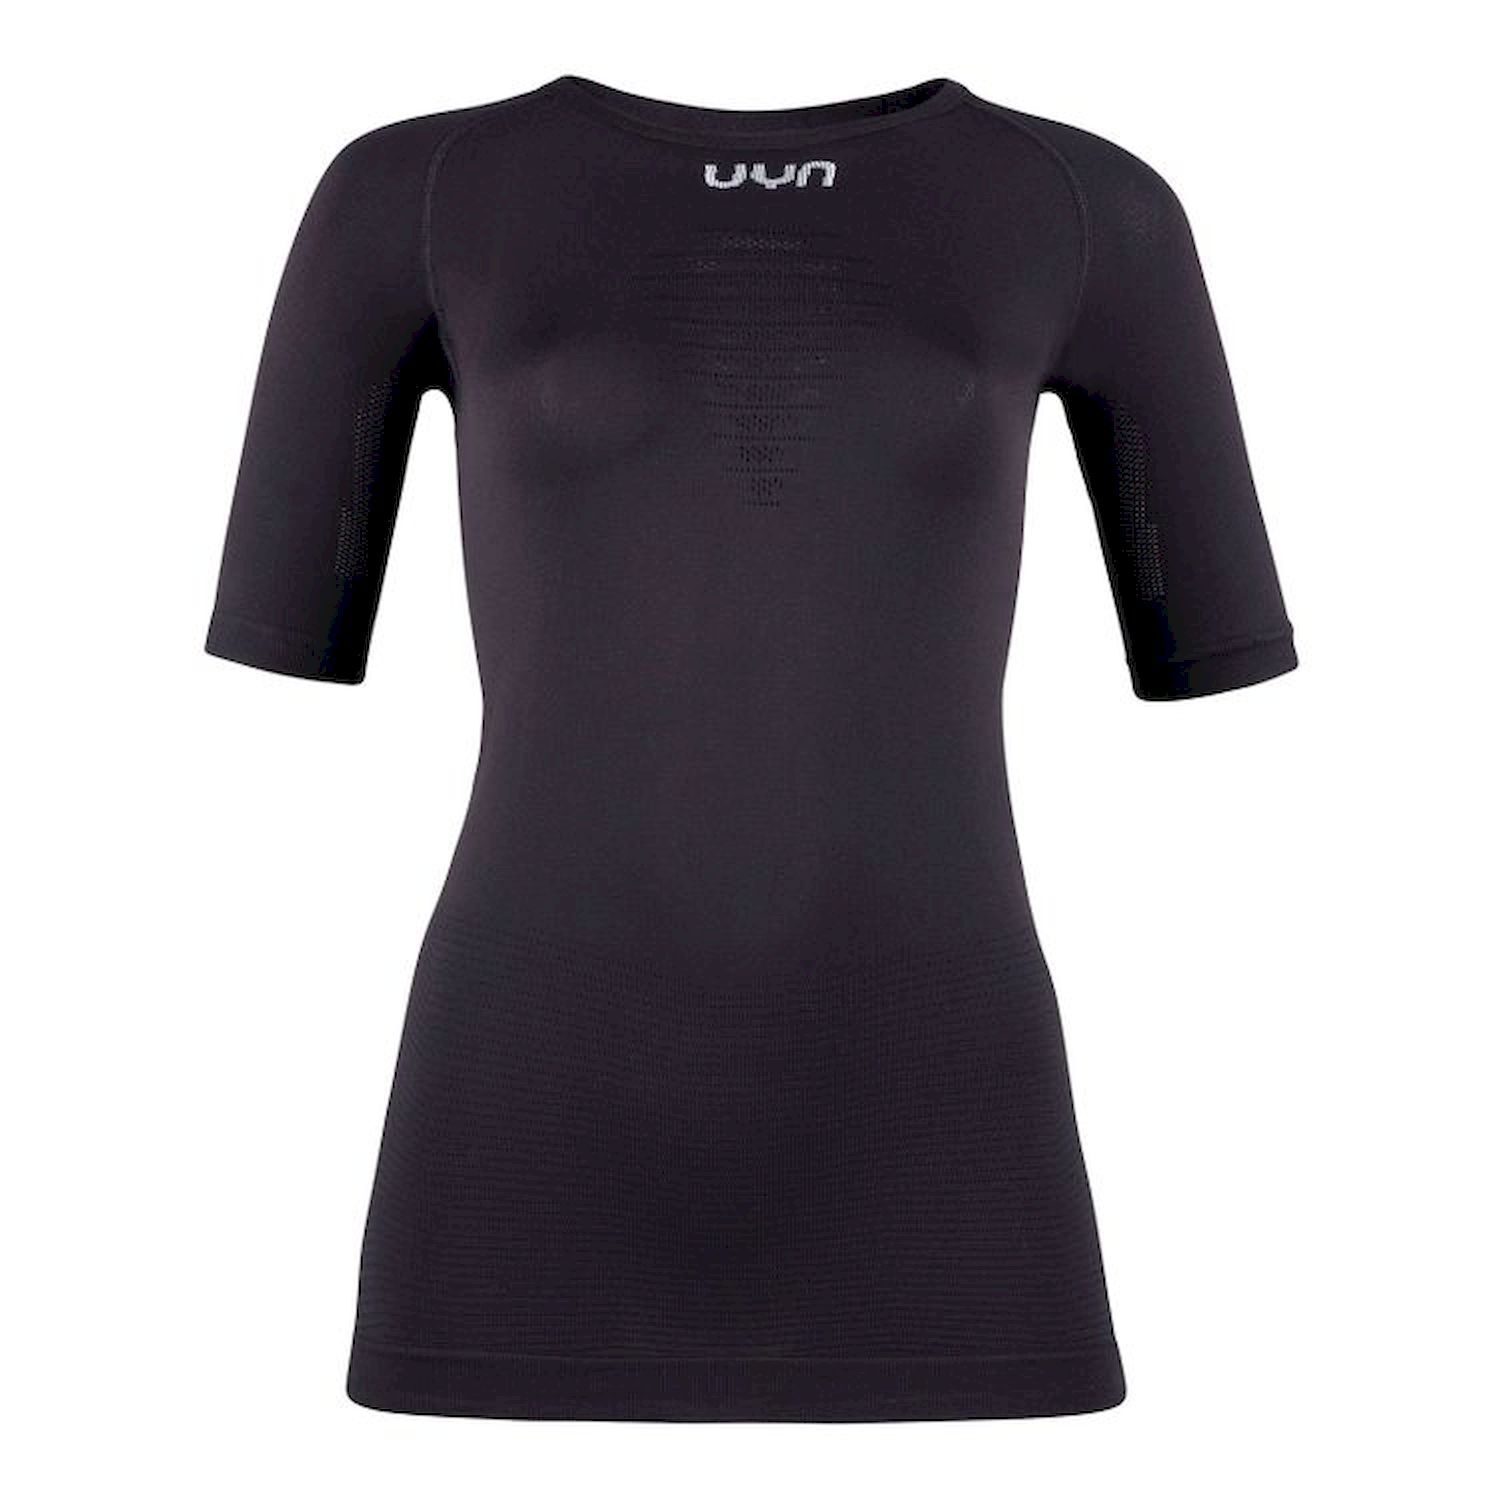 Uyn Energyon UW Shirt Short Sleeve - Cycling jersey - Women's